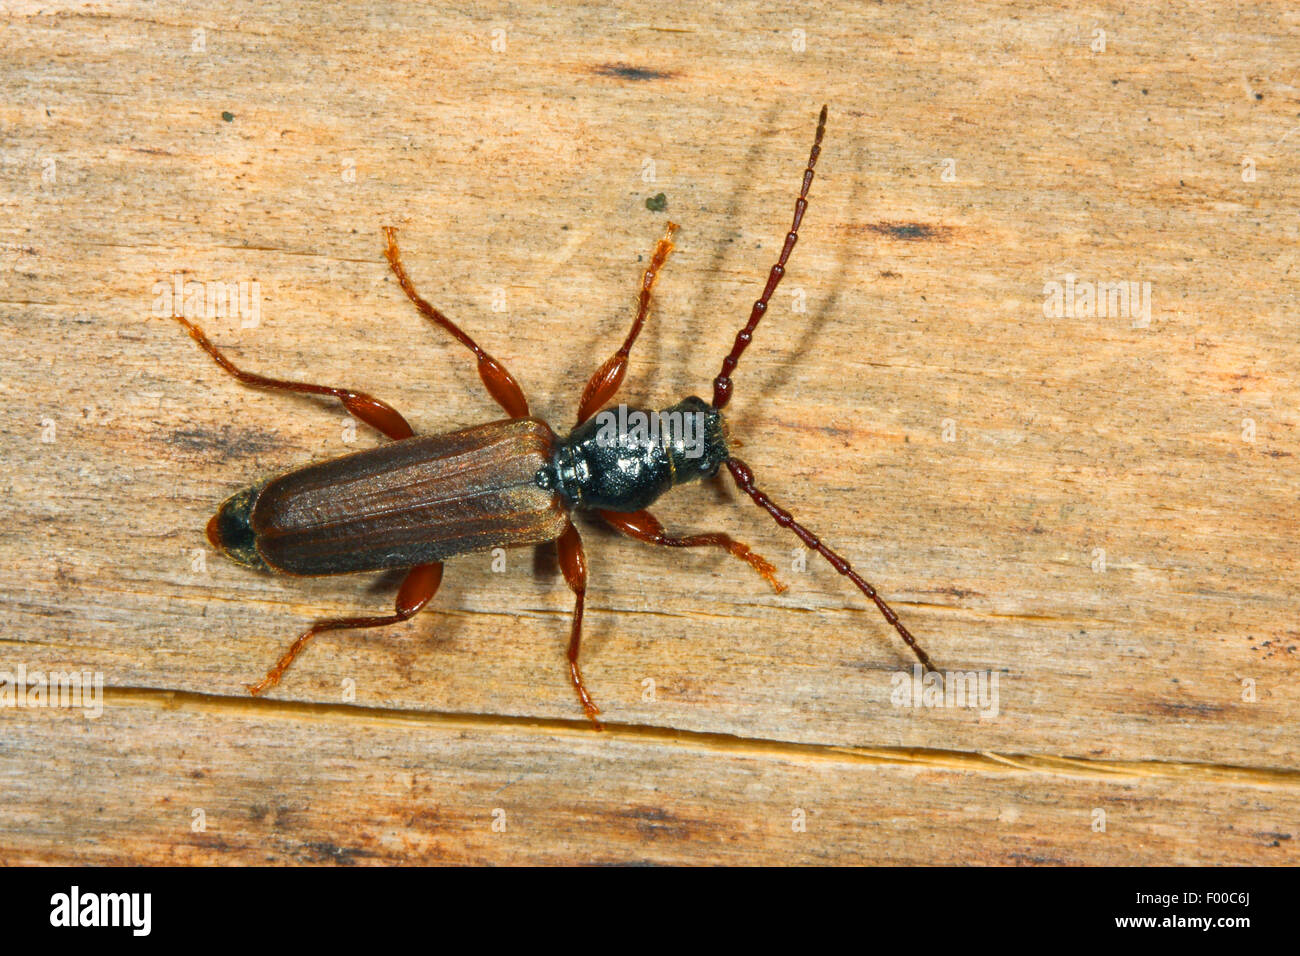 Black spruce beetle, Black spruce long-horn beetle, European spruce longhorn beetle (Tetropium castaneum, Tetropium luridum), on deadwood, Germany Stock Photo